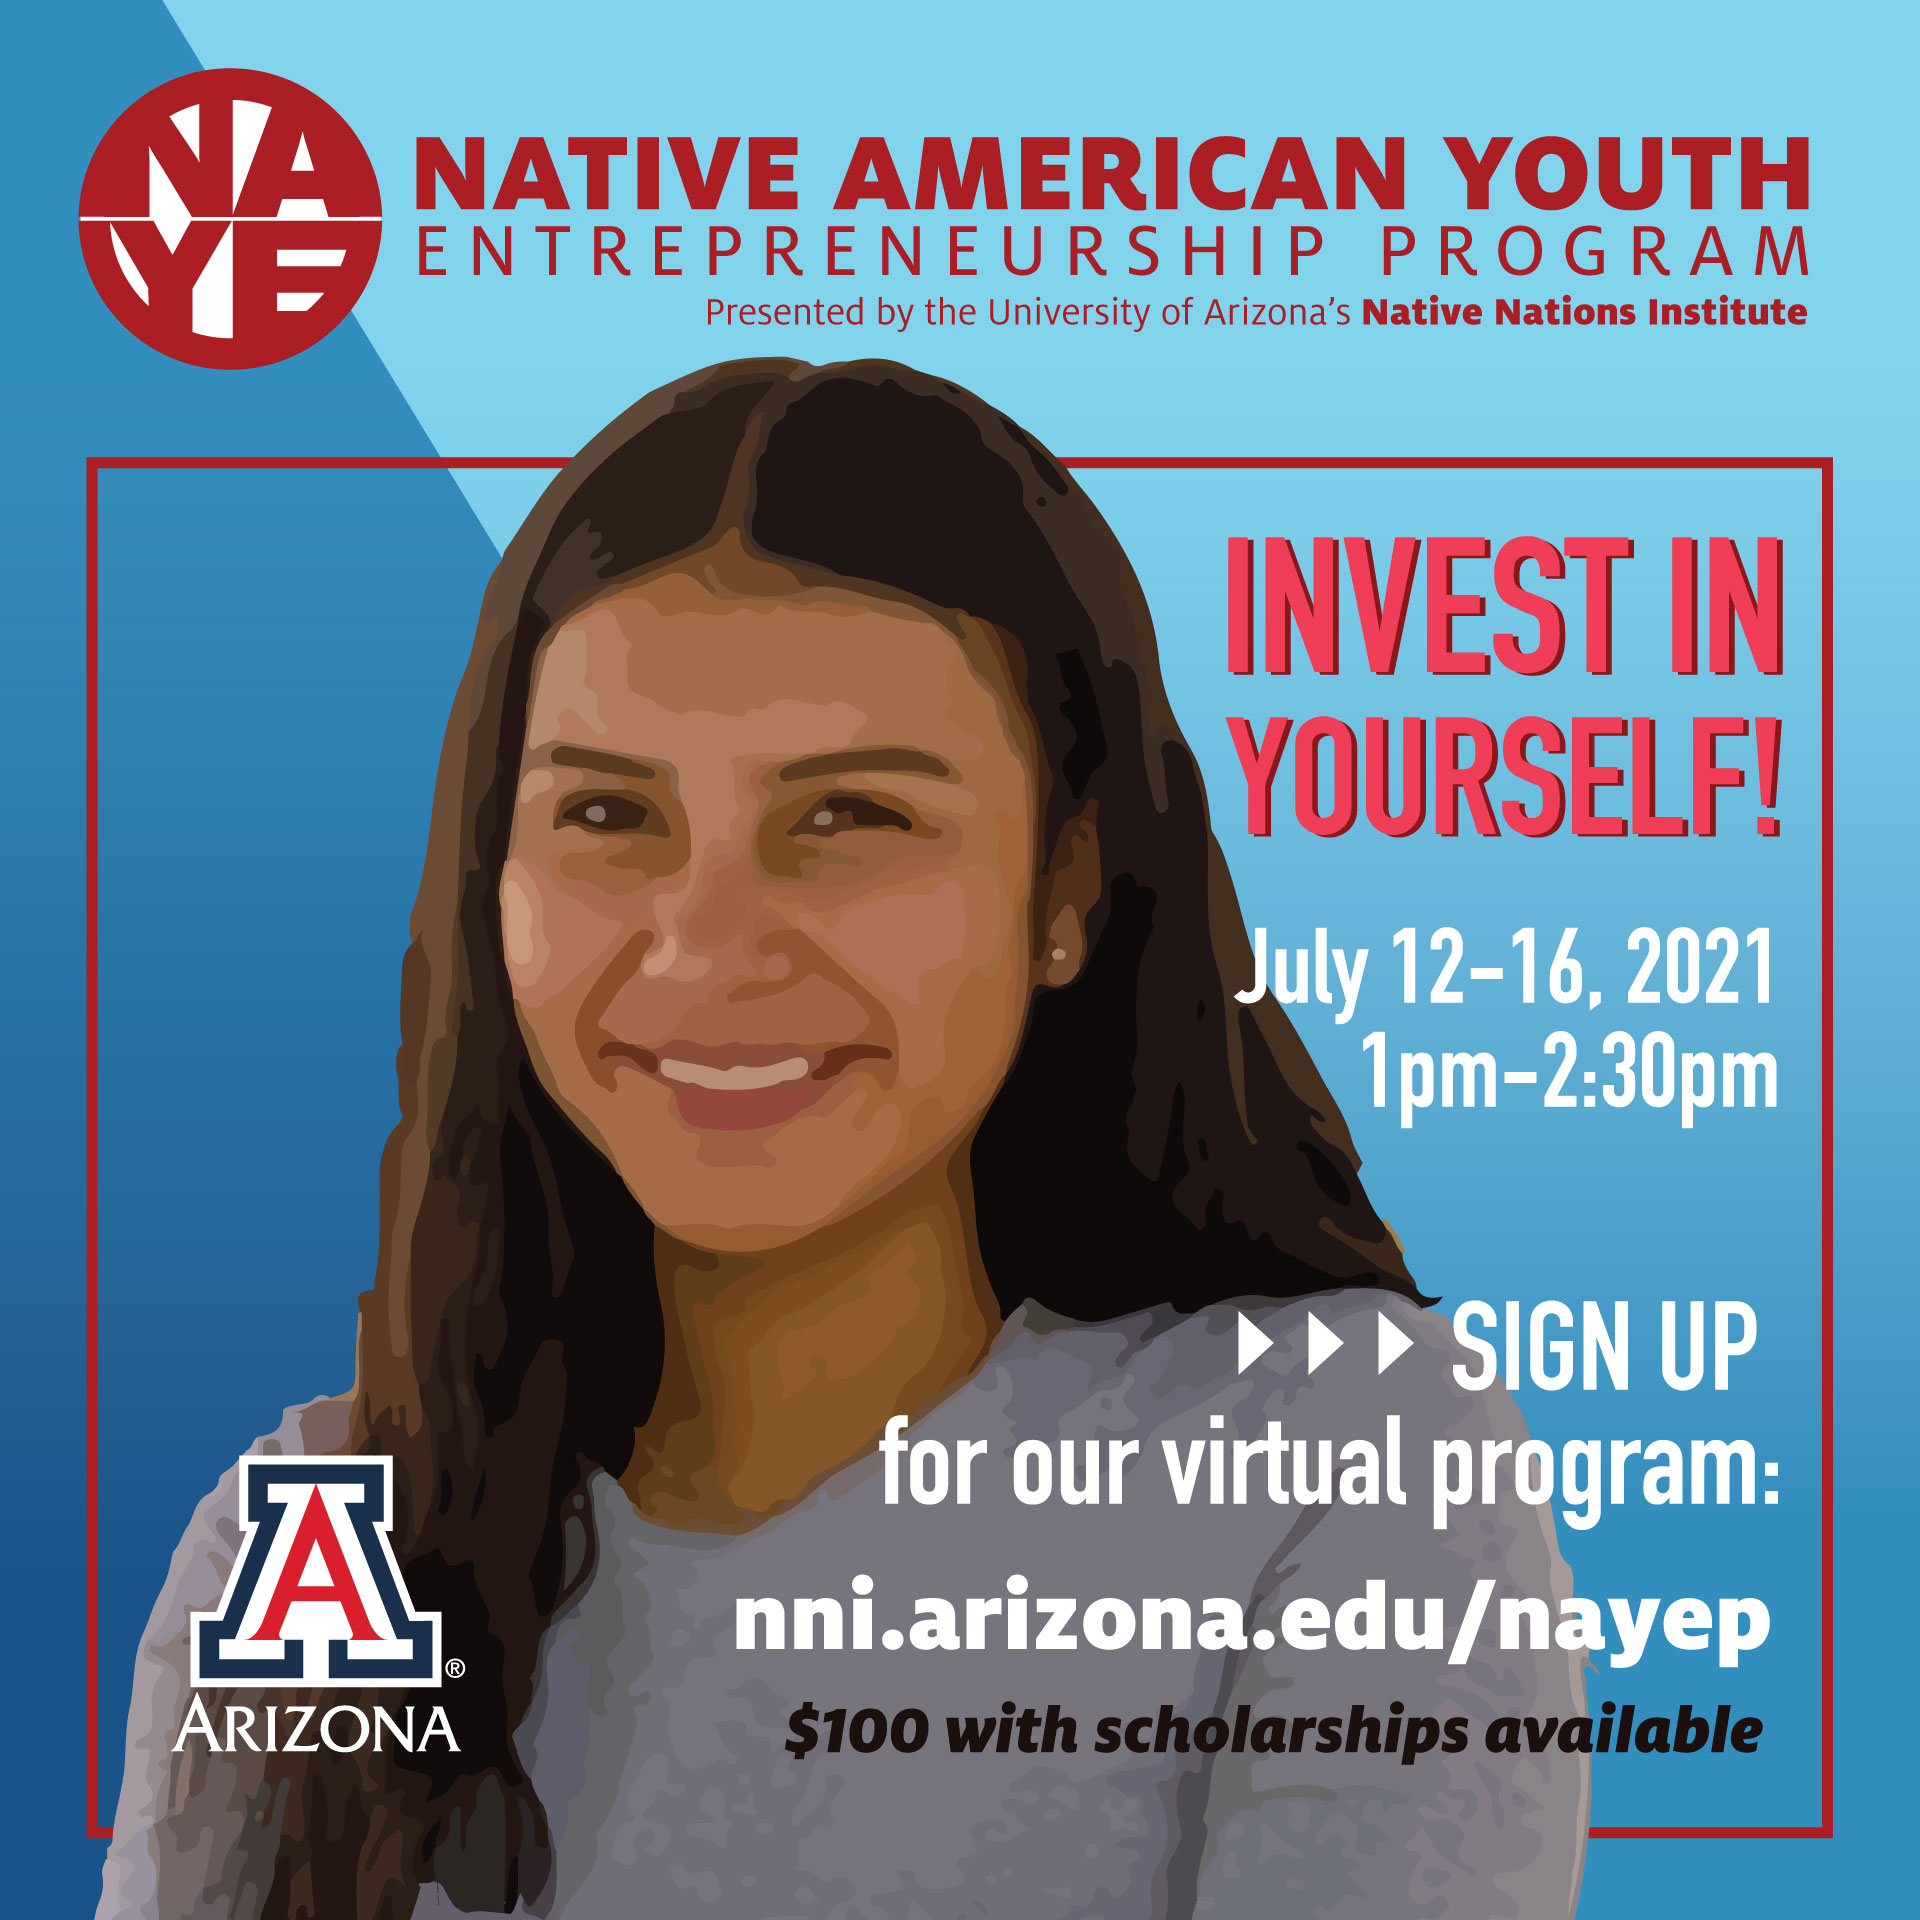 NNI’s Native American Youth Entrepreneurship Program